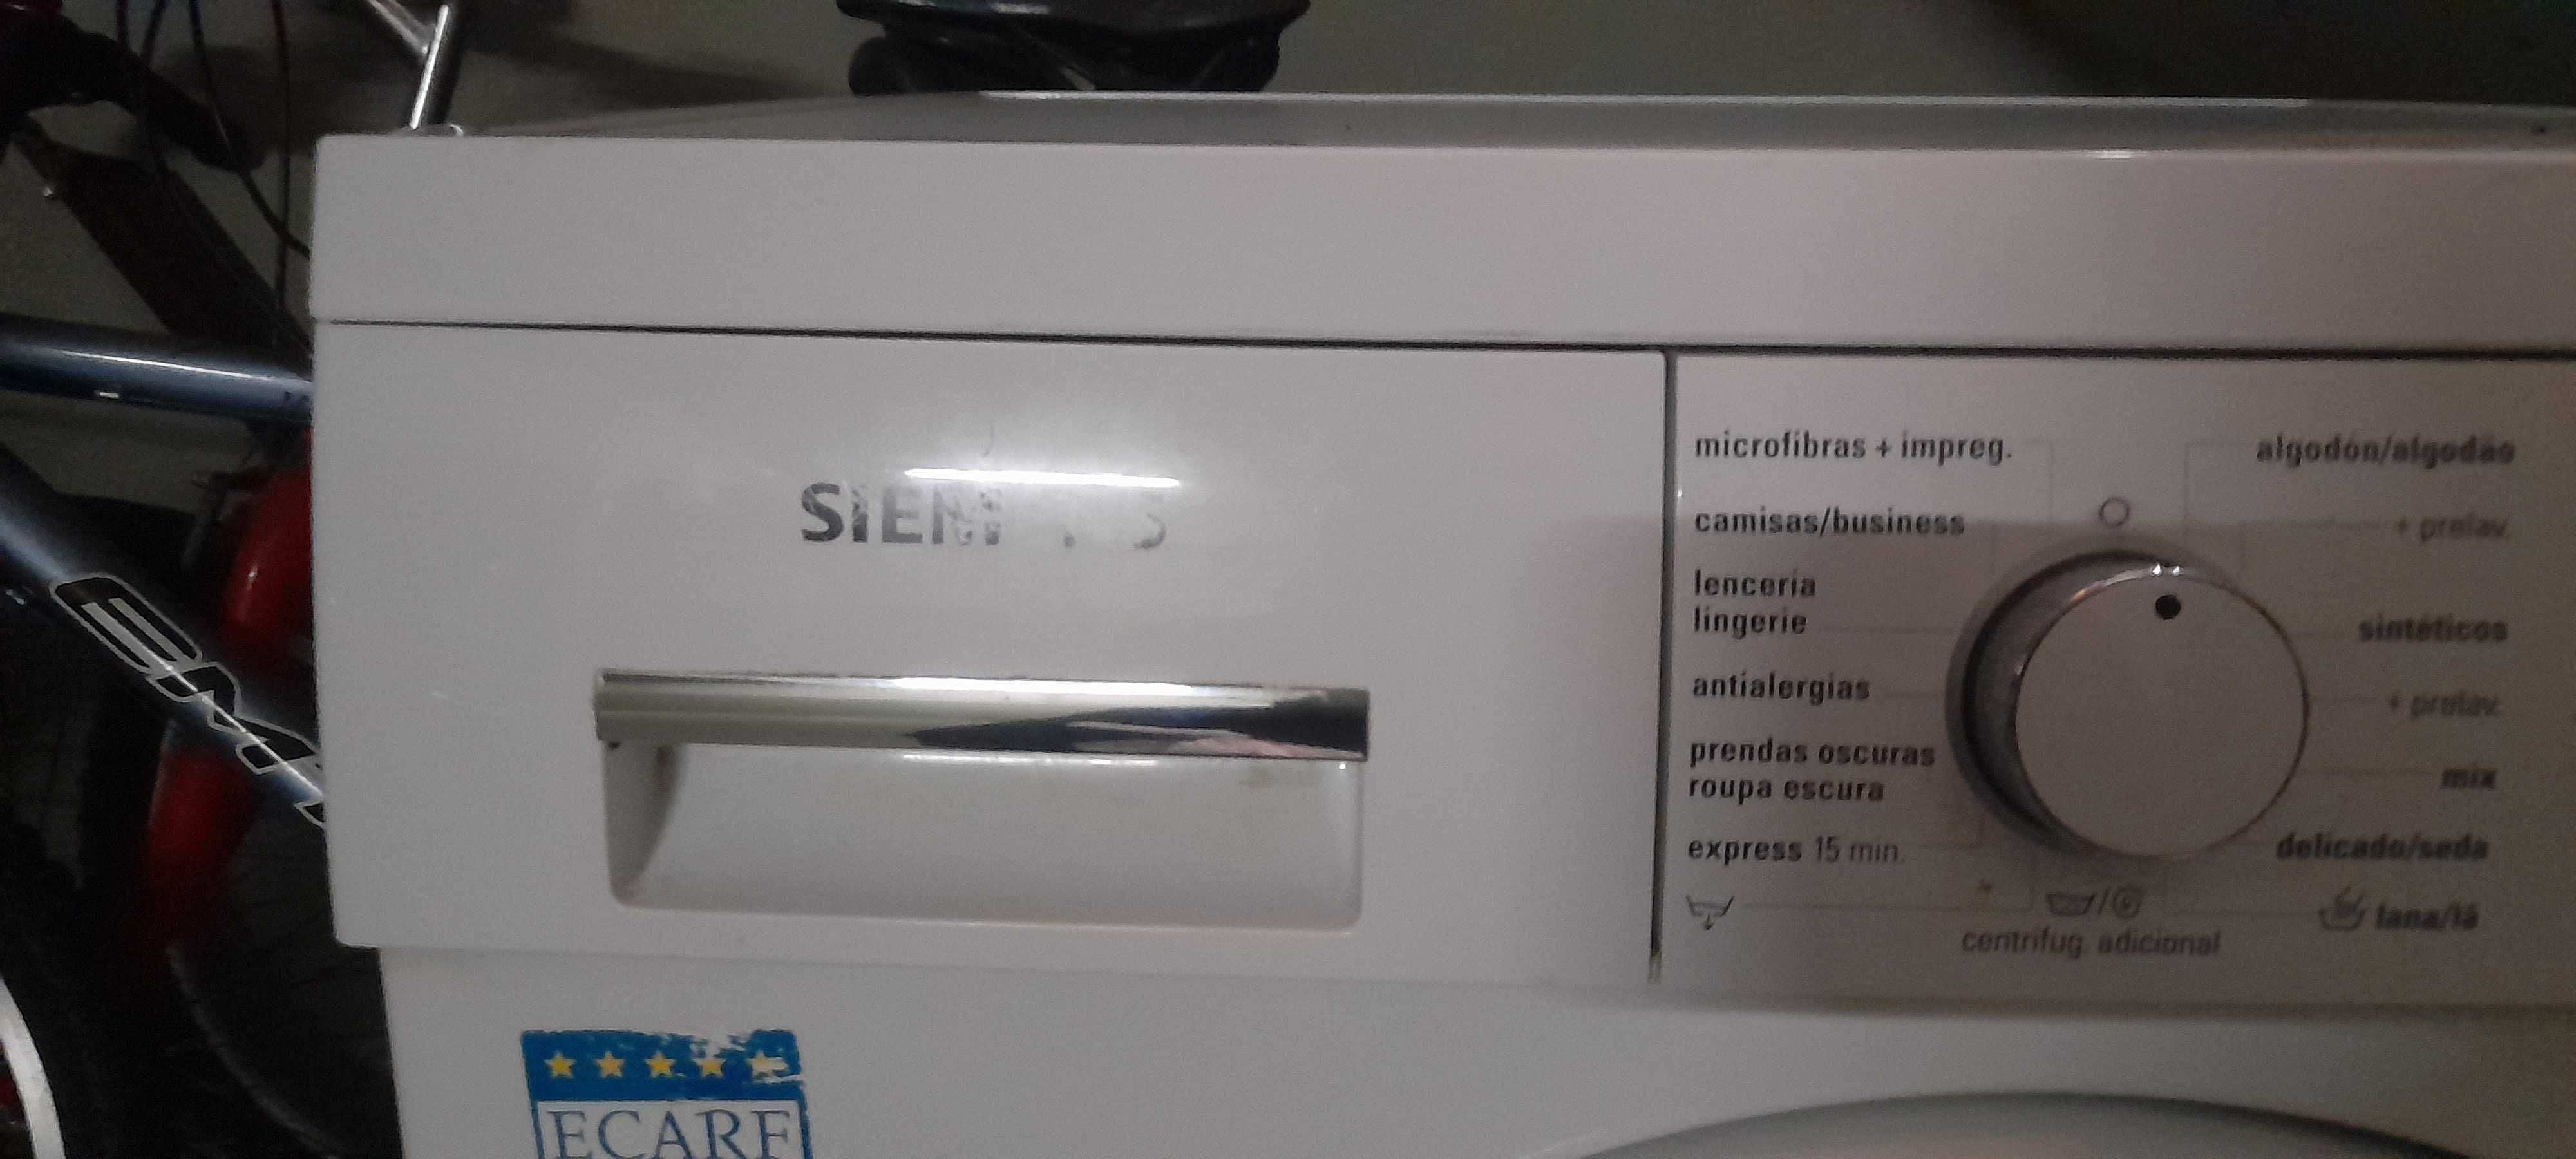 Máquina lavar roupa siemens